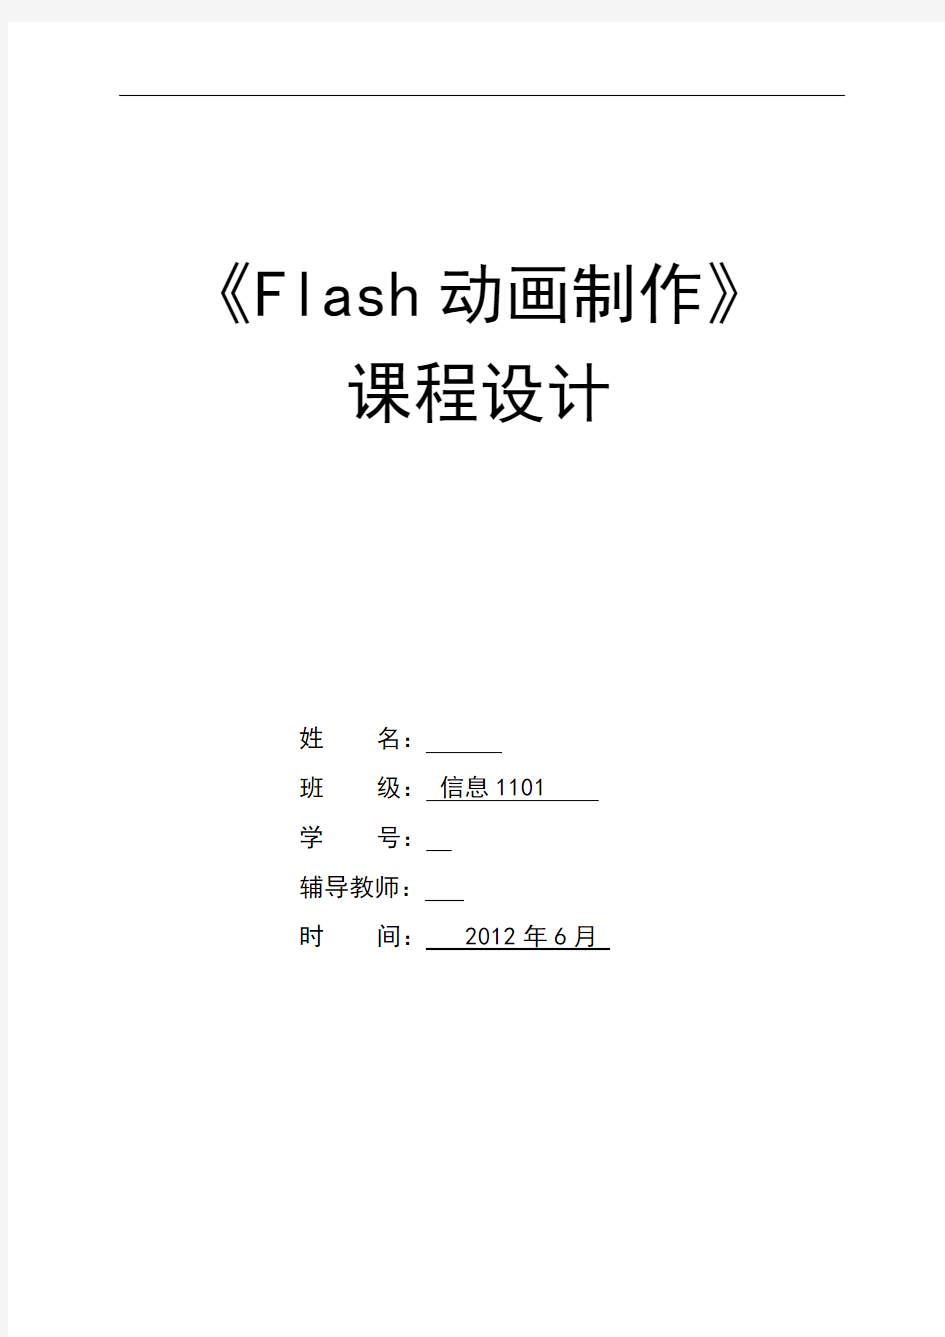 flash节约用水课程设计报告